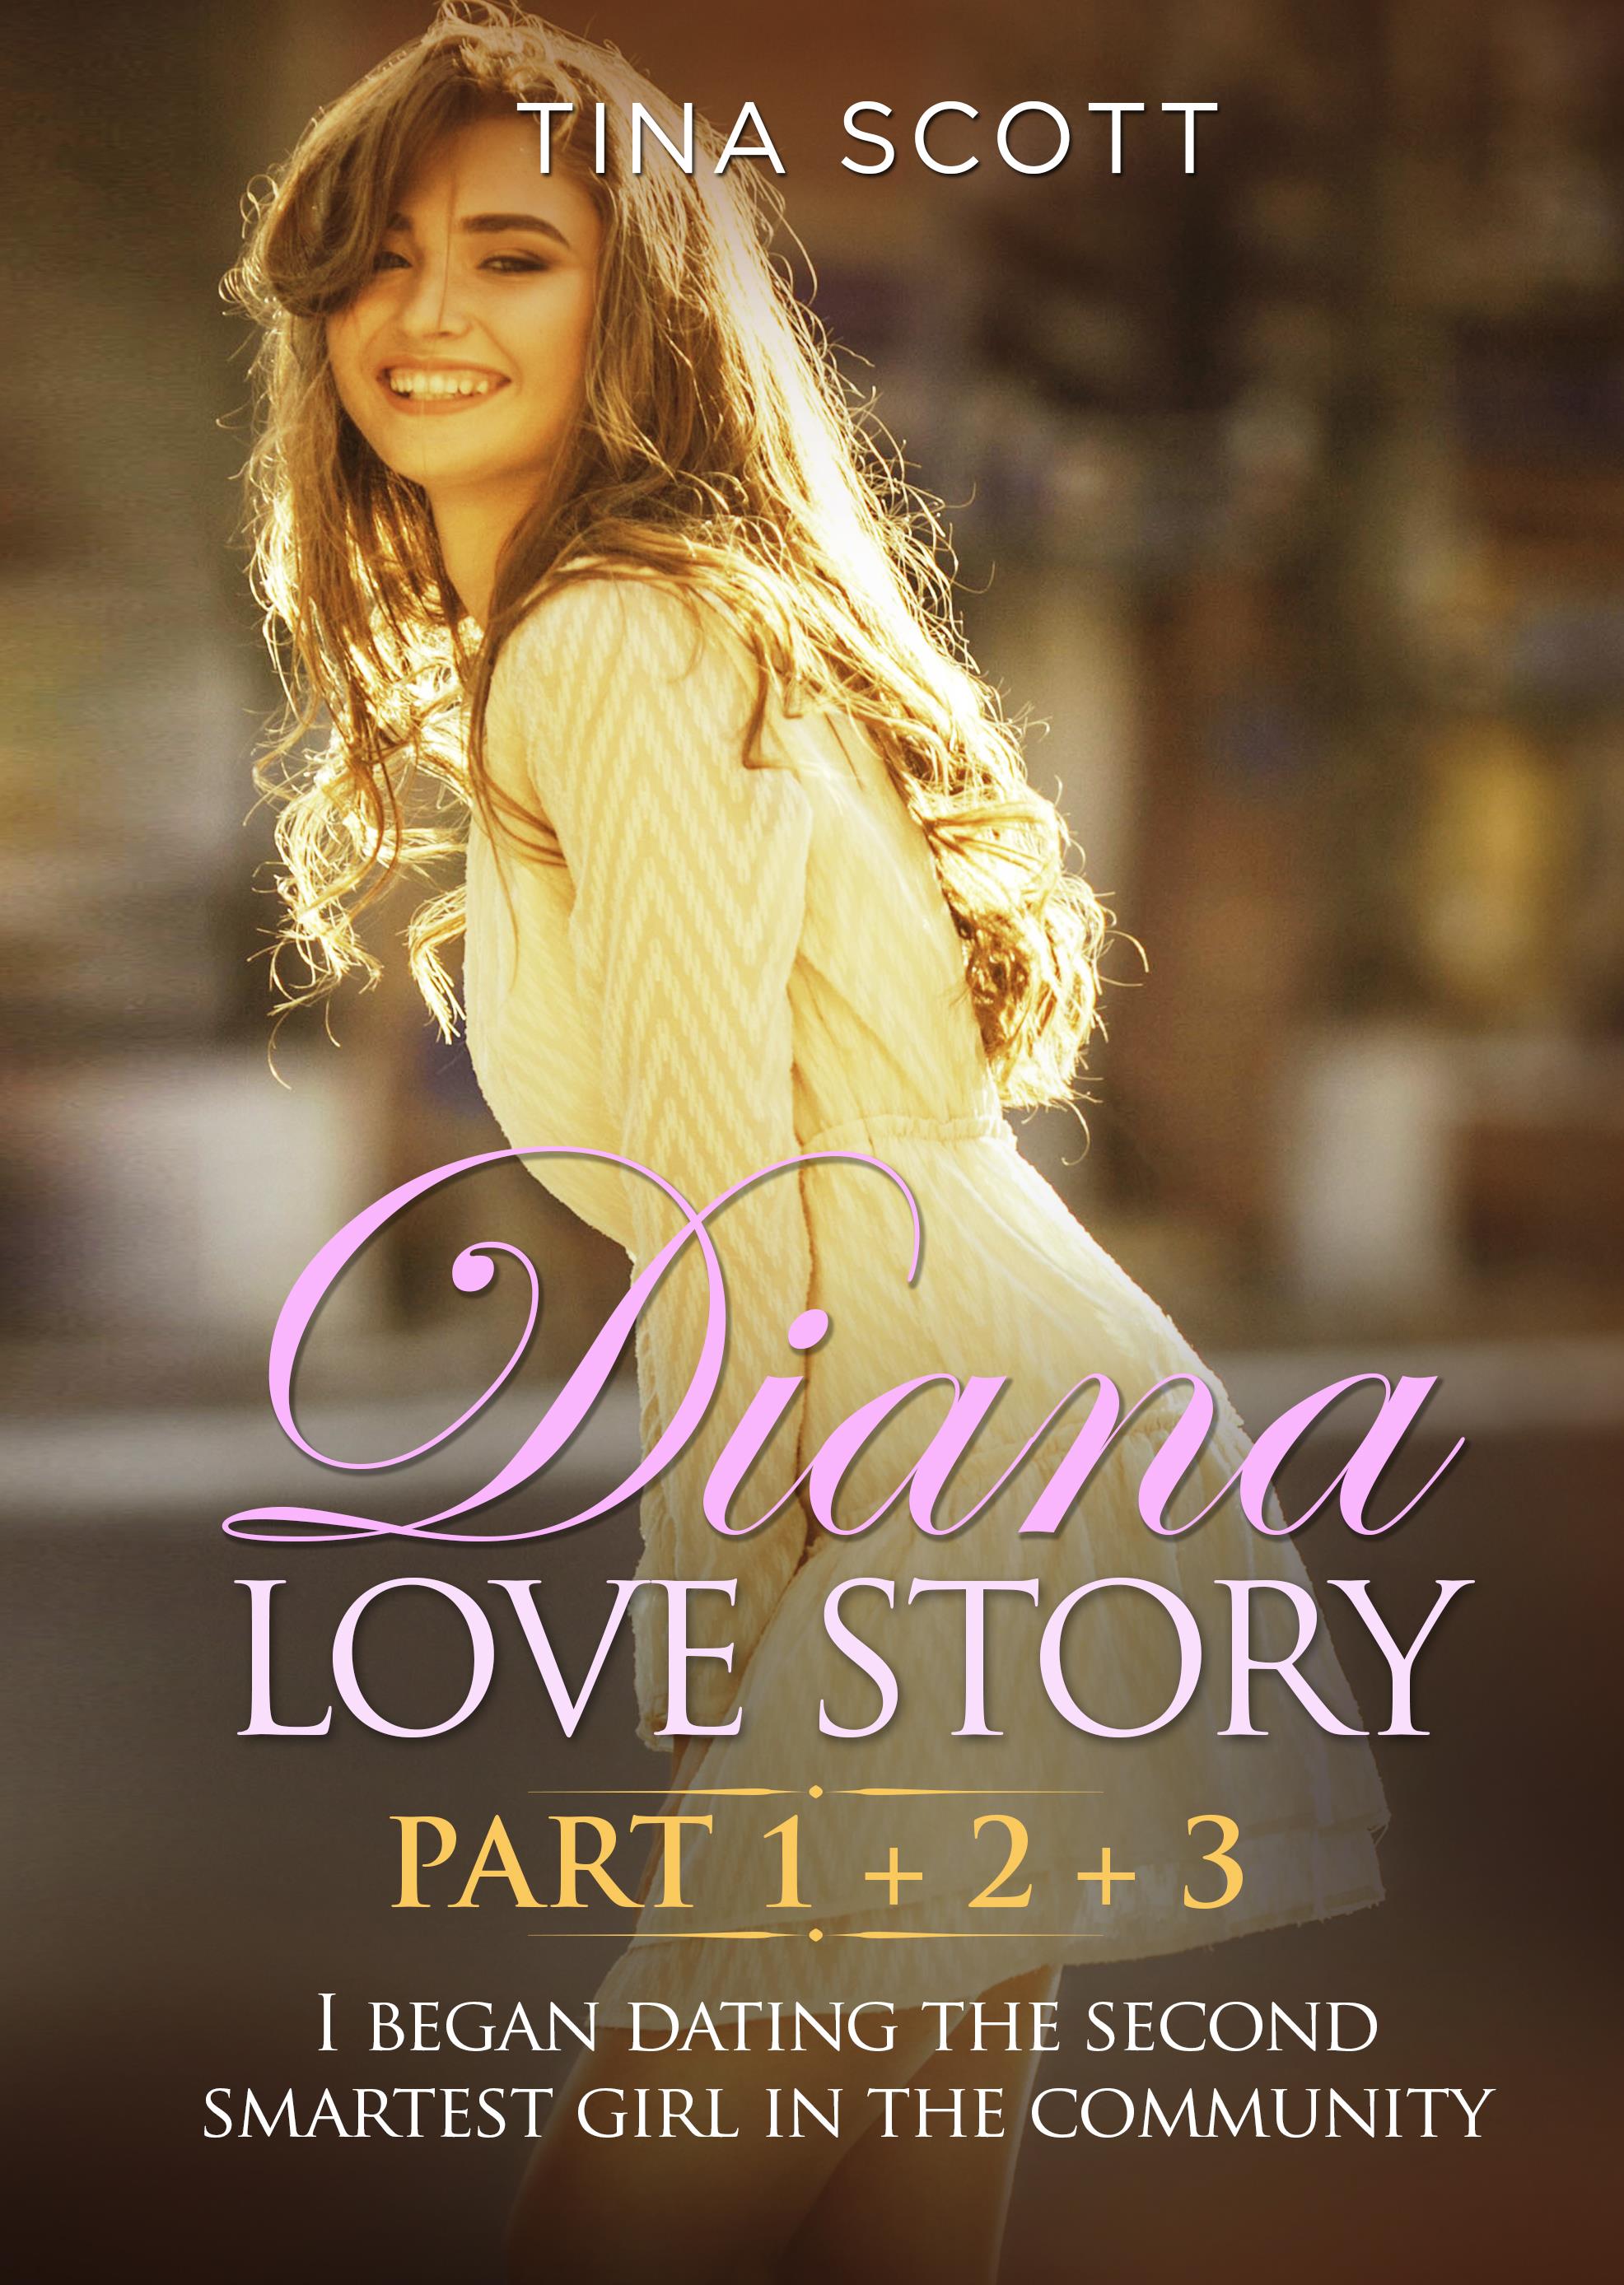 Diana Love Story (PT. 1 + PT.2 + PT3). I began dating the second smartest girl in the community.